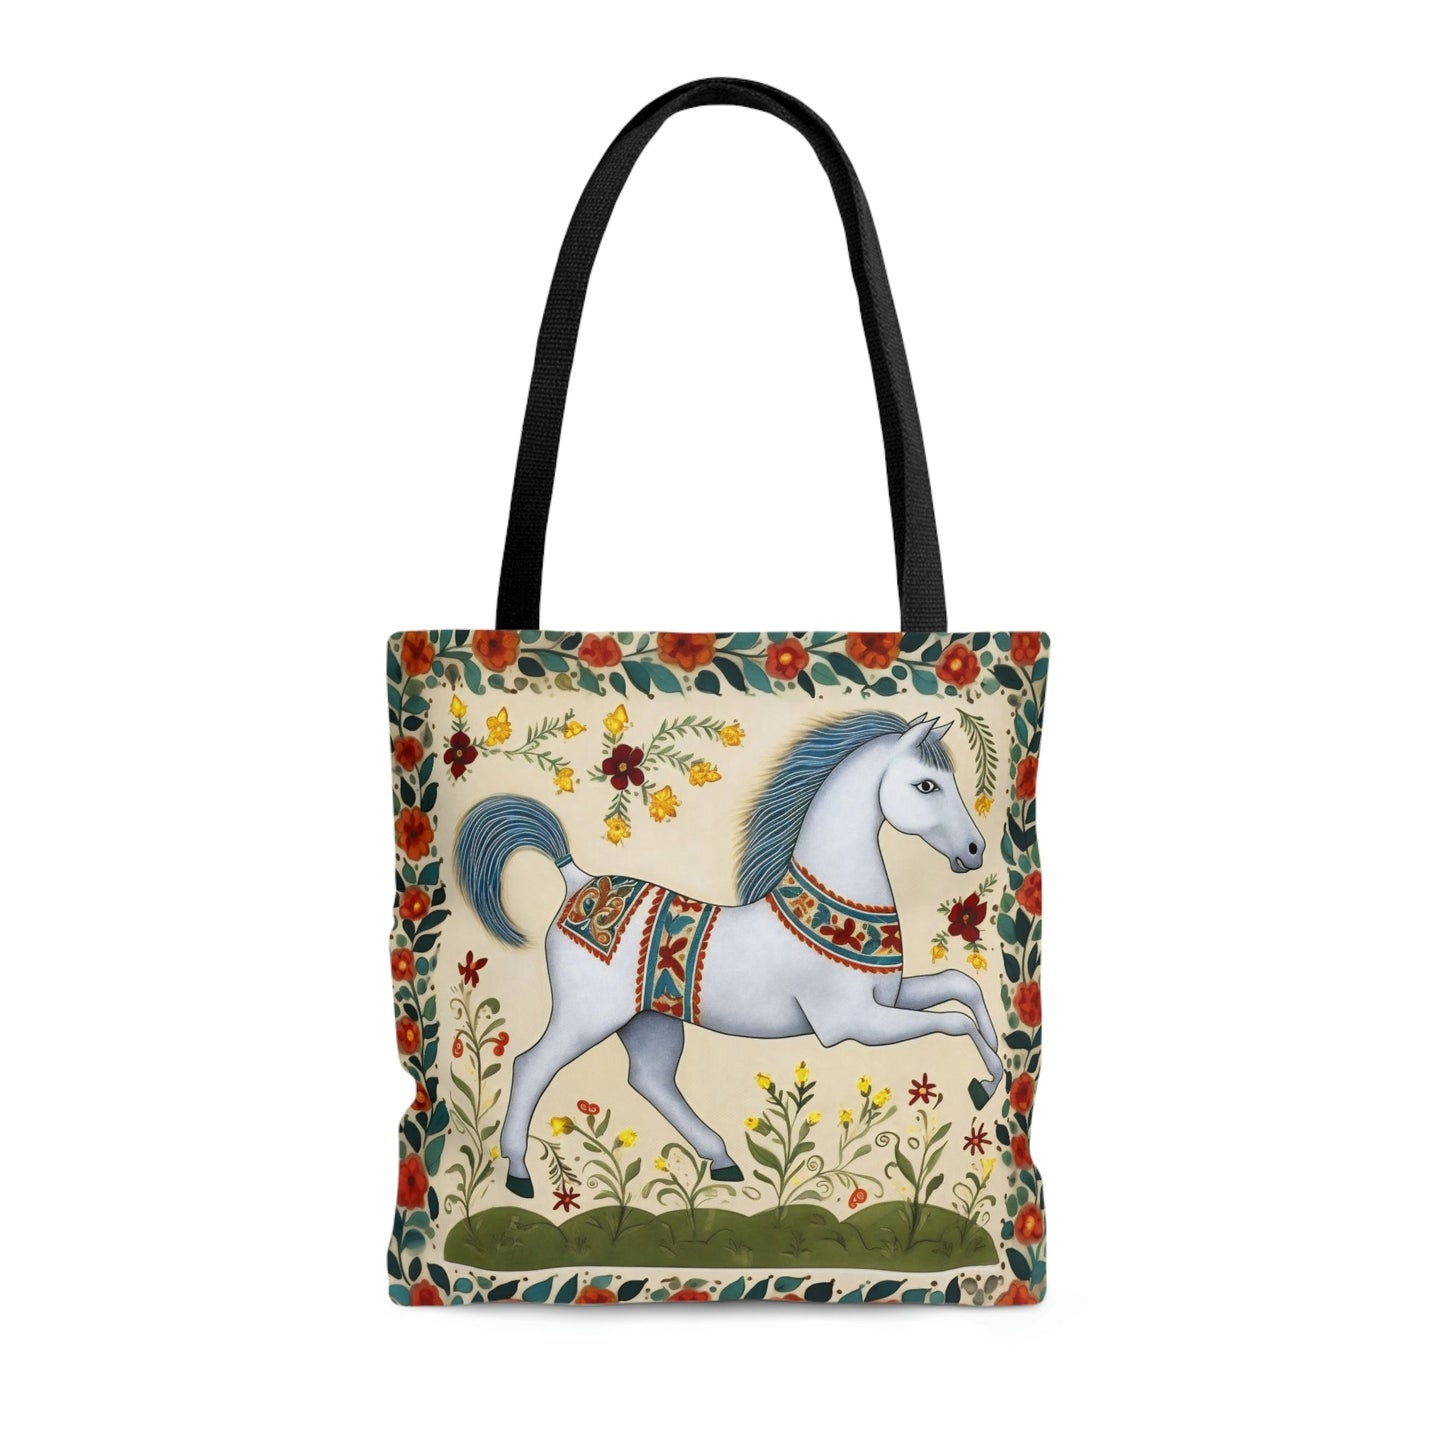 Folk Art White Horse Tote Bag - Cute Cottagecore Totebag Makes the Perfect Gift